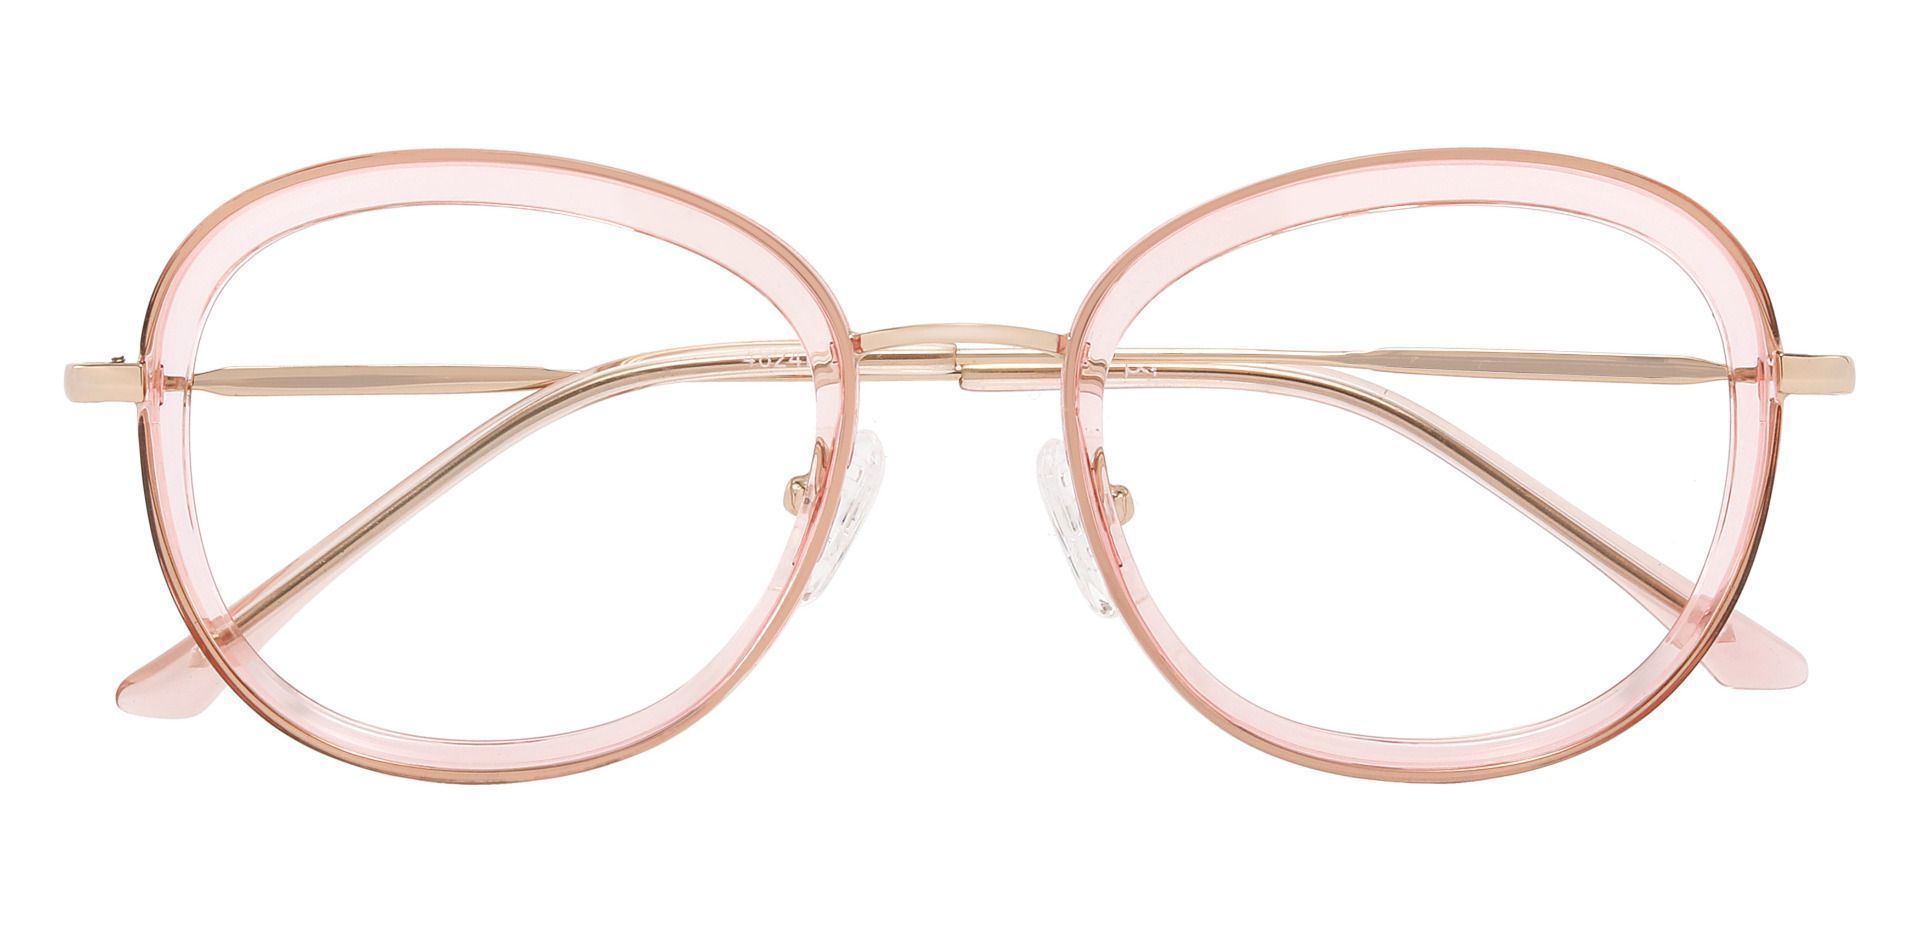 Bourbon Oval Prescription Glasses - Pink